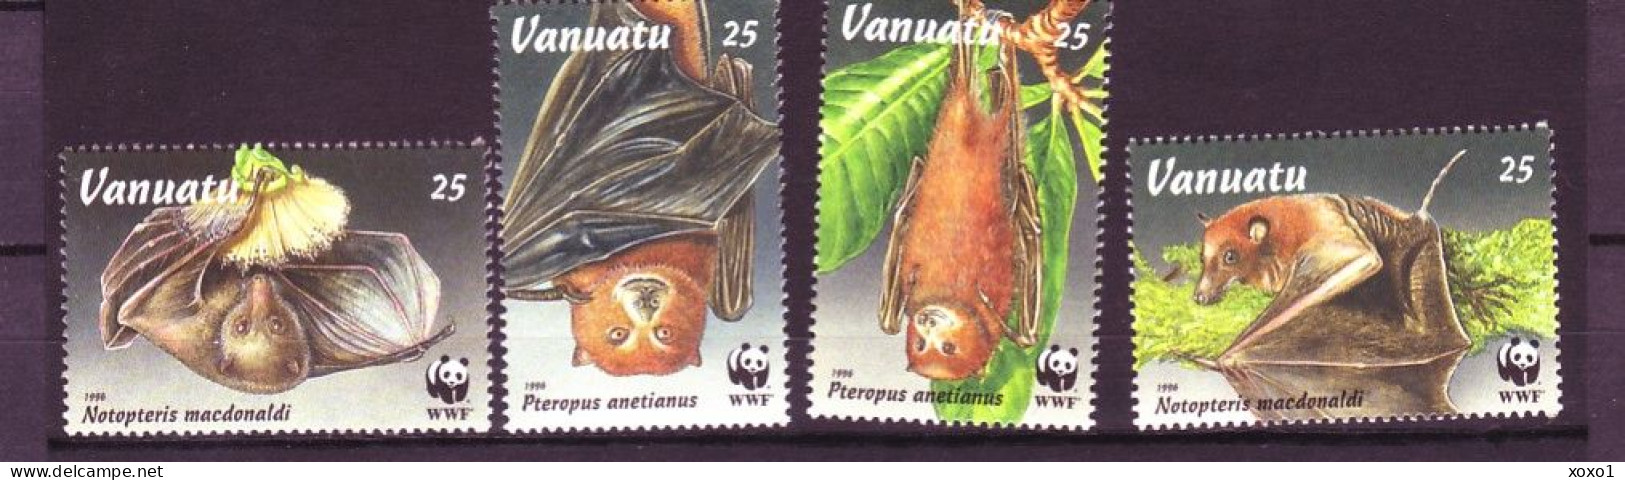 Vanuatu 1996 MiNr. 1004 - 1009 WWF Mammals Bats Insular Flying Fox, Fijian Blossom Bat  4v  MNH** 3.60 € - Bats